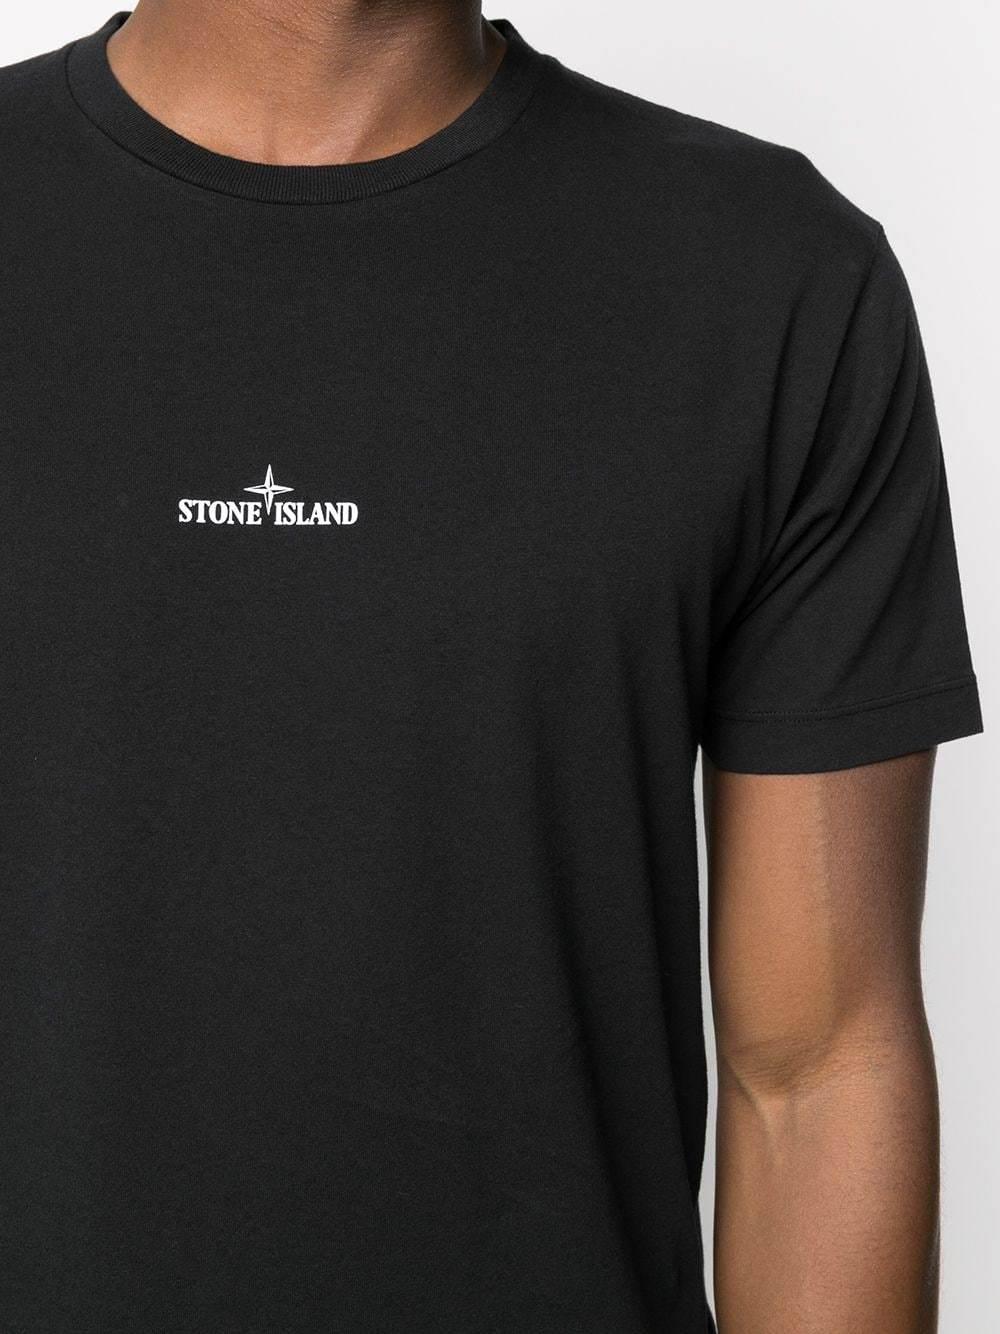 Stone Island Back Marble One Print T-shirt Black for Men | Lyst